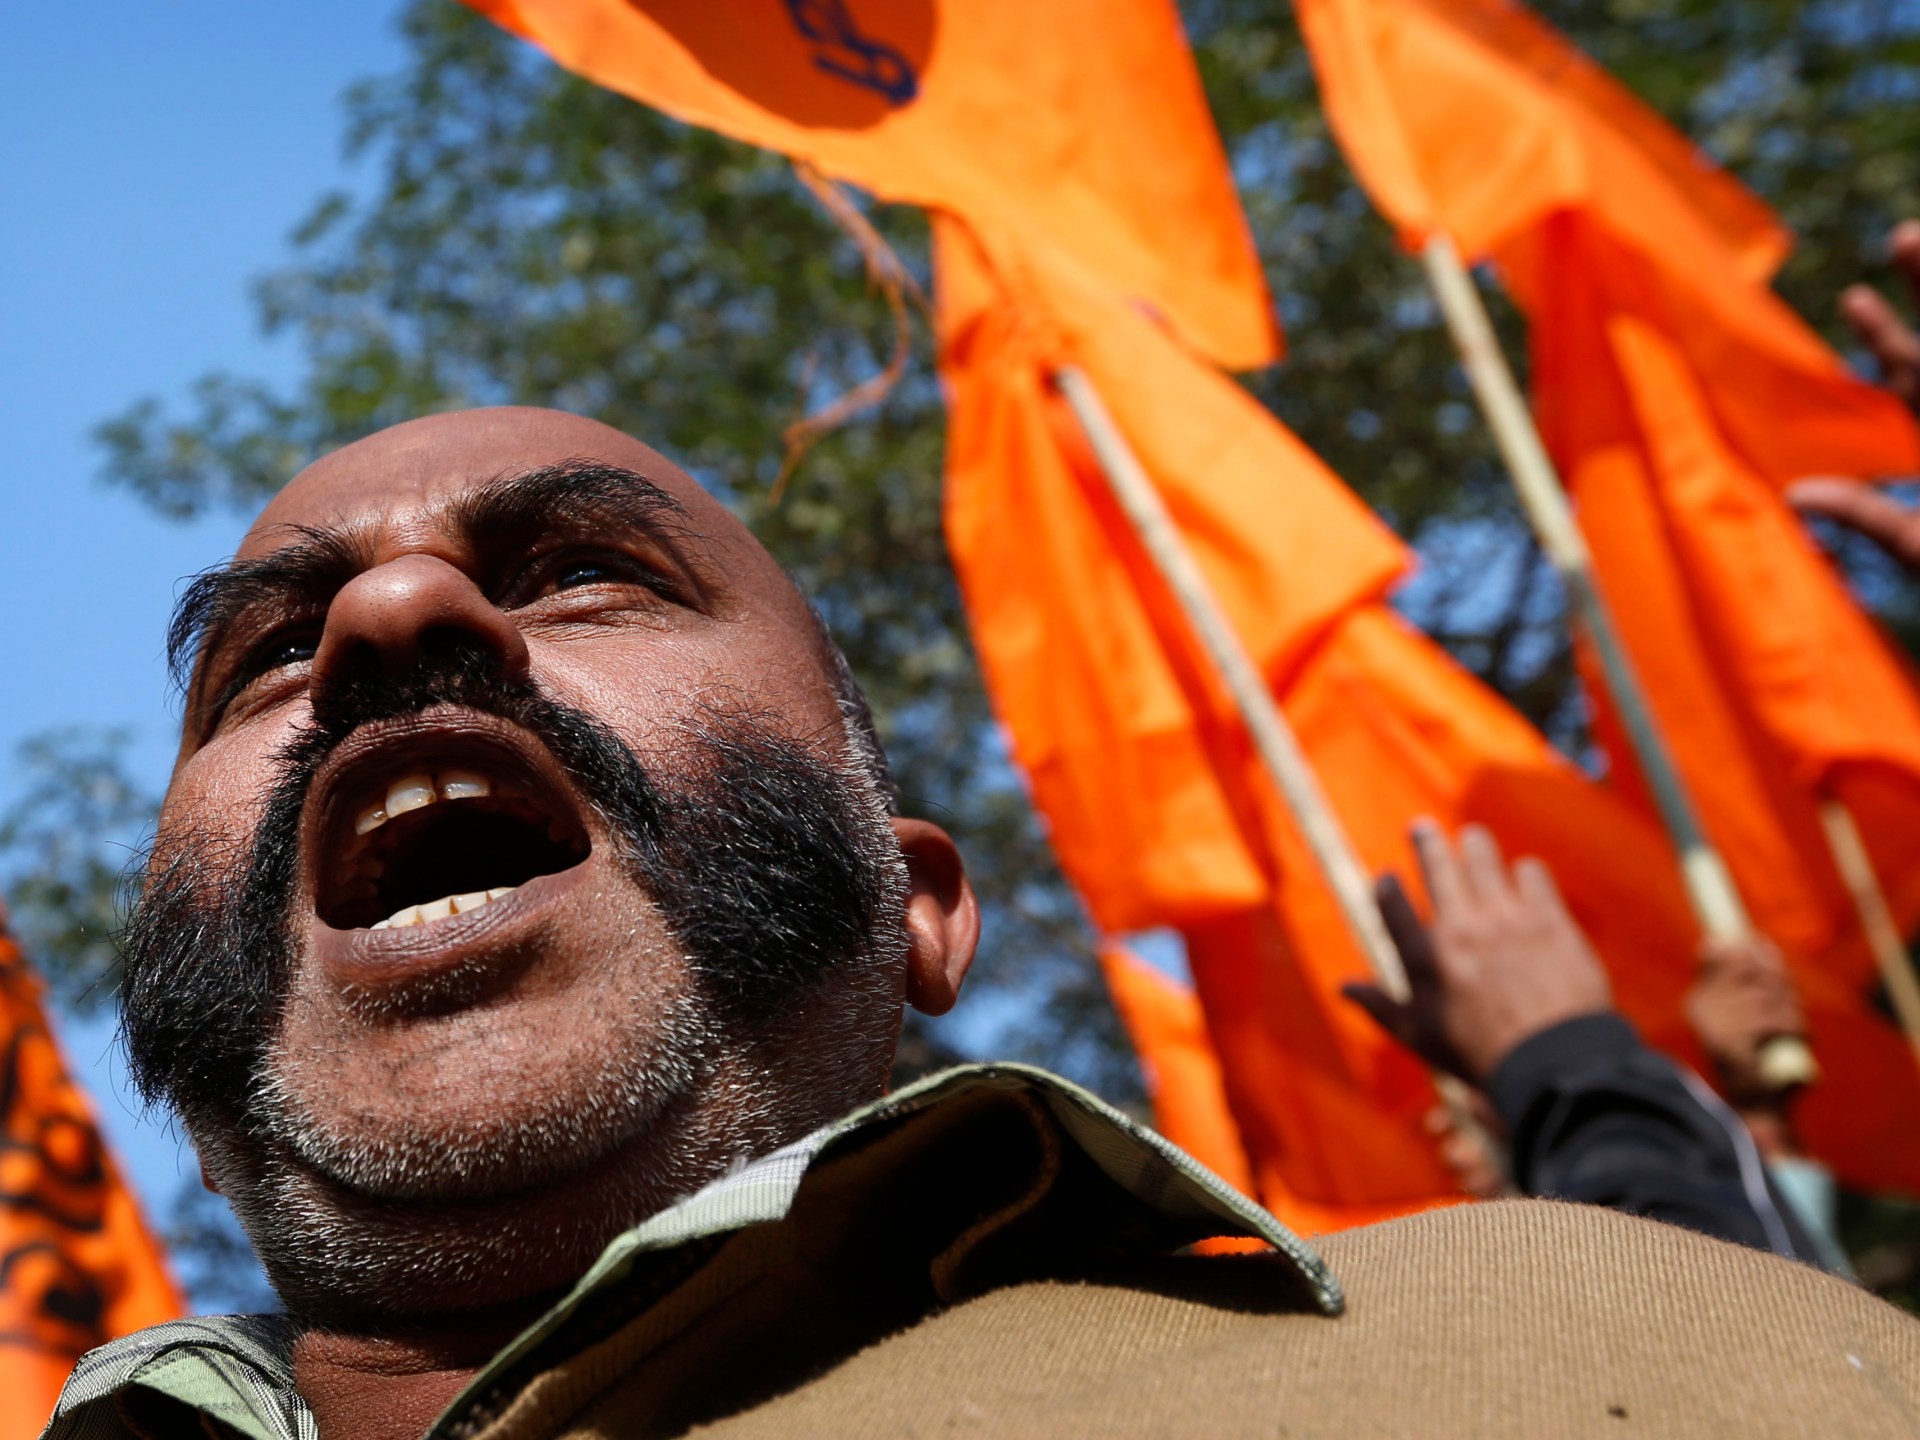 Hamas to halal: How anti-Muslim hate speech is spreading in India | Islamophobia News